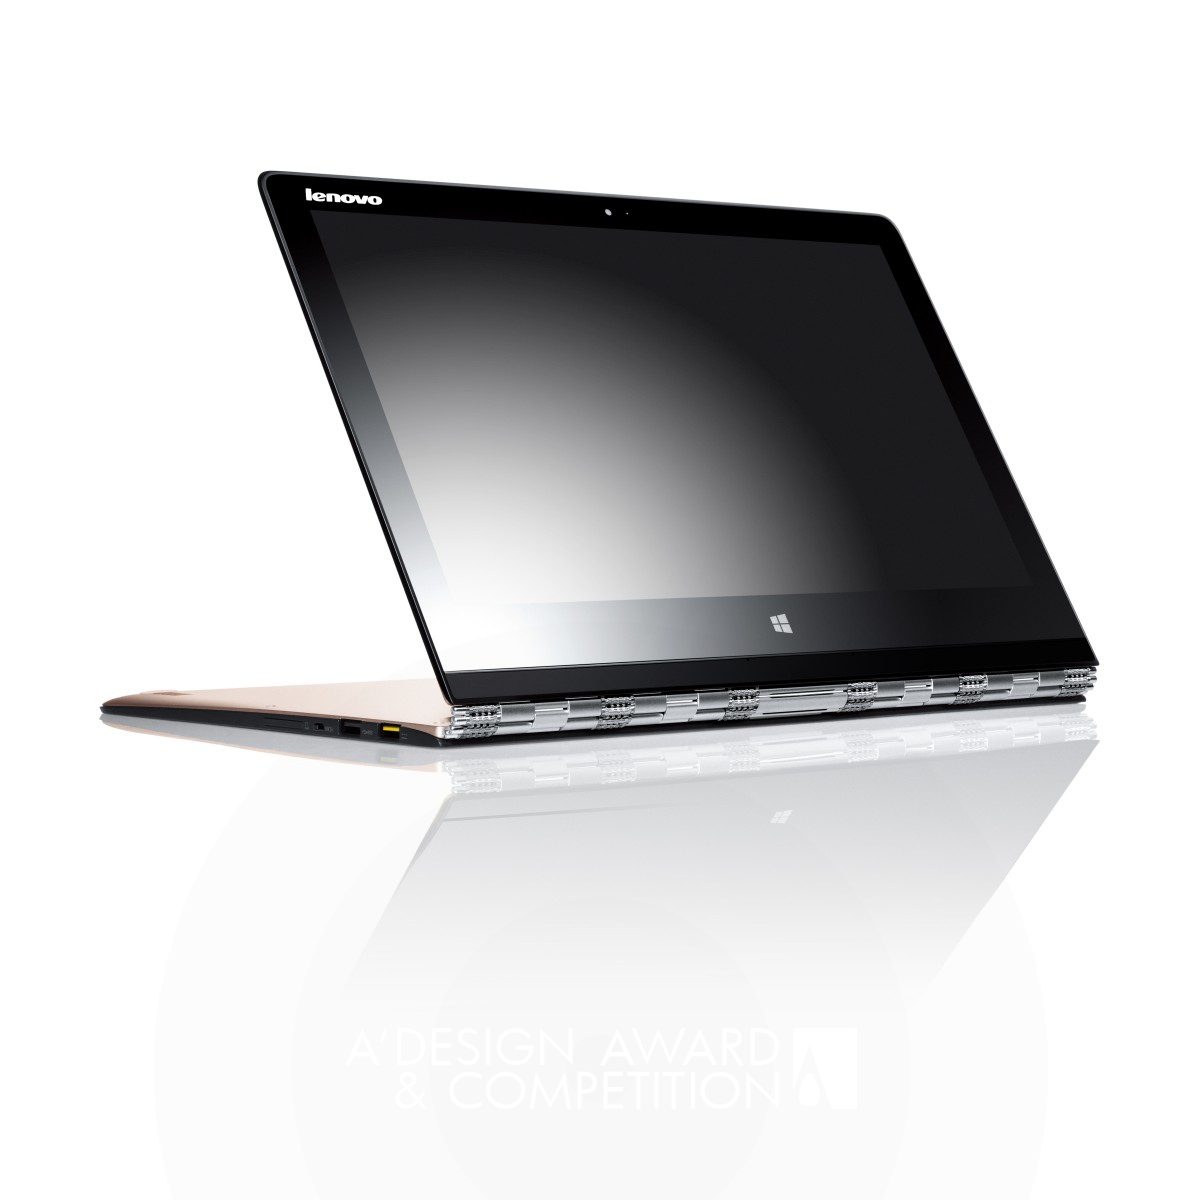 Yoga 3 Pro laptop